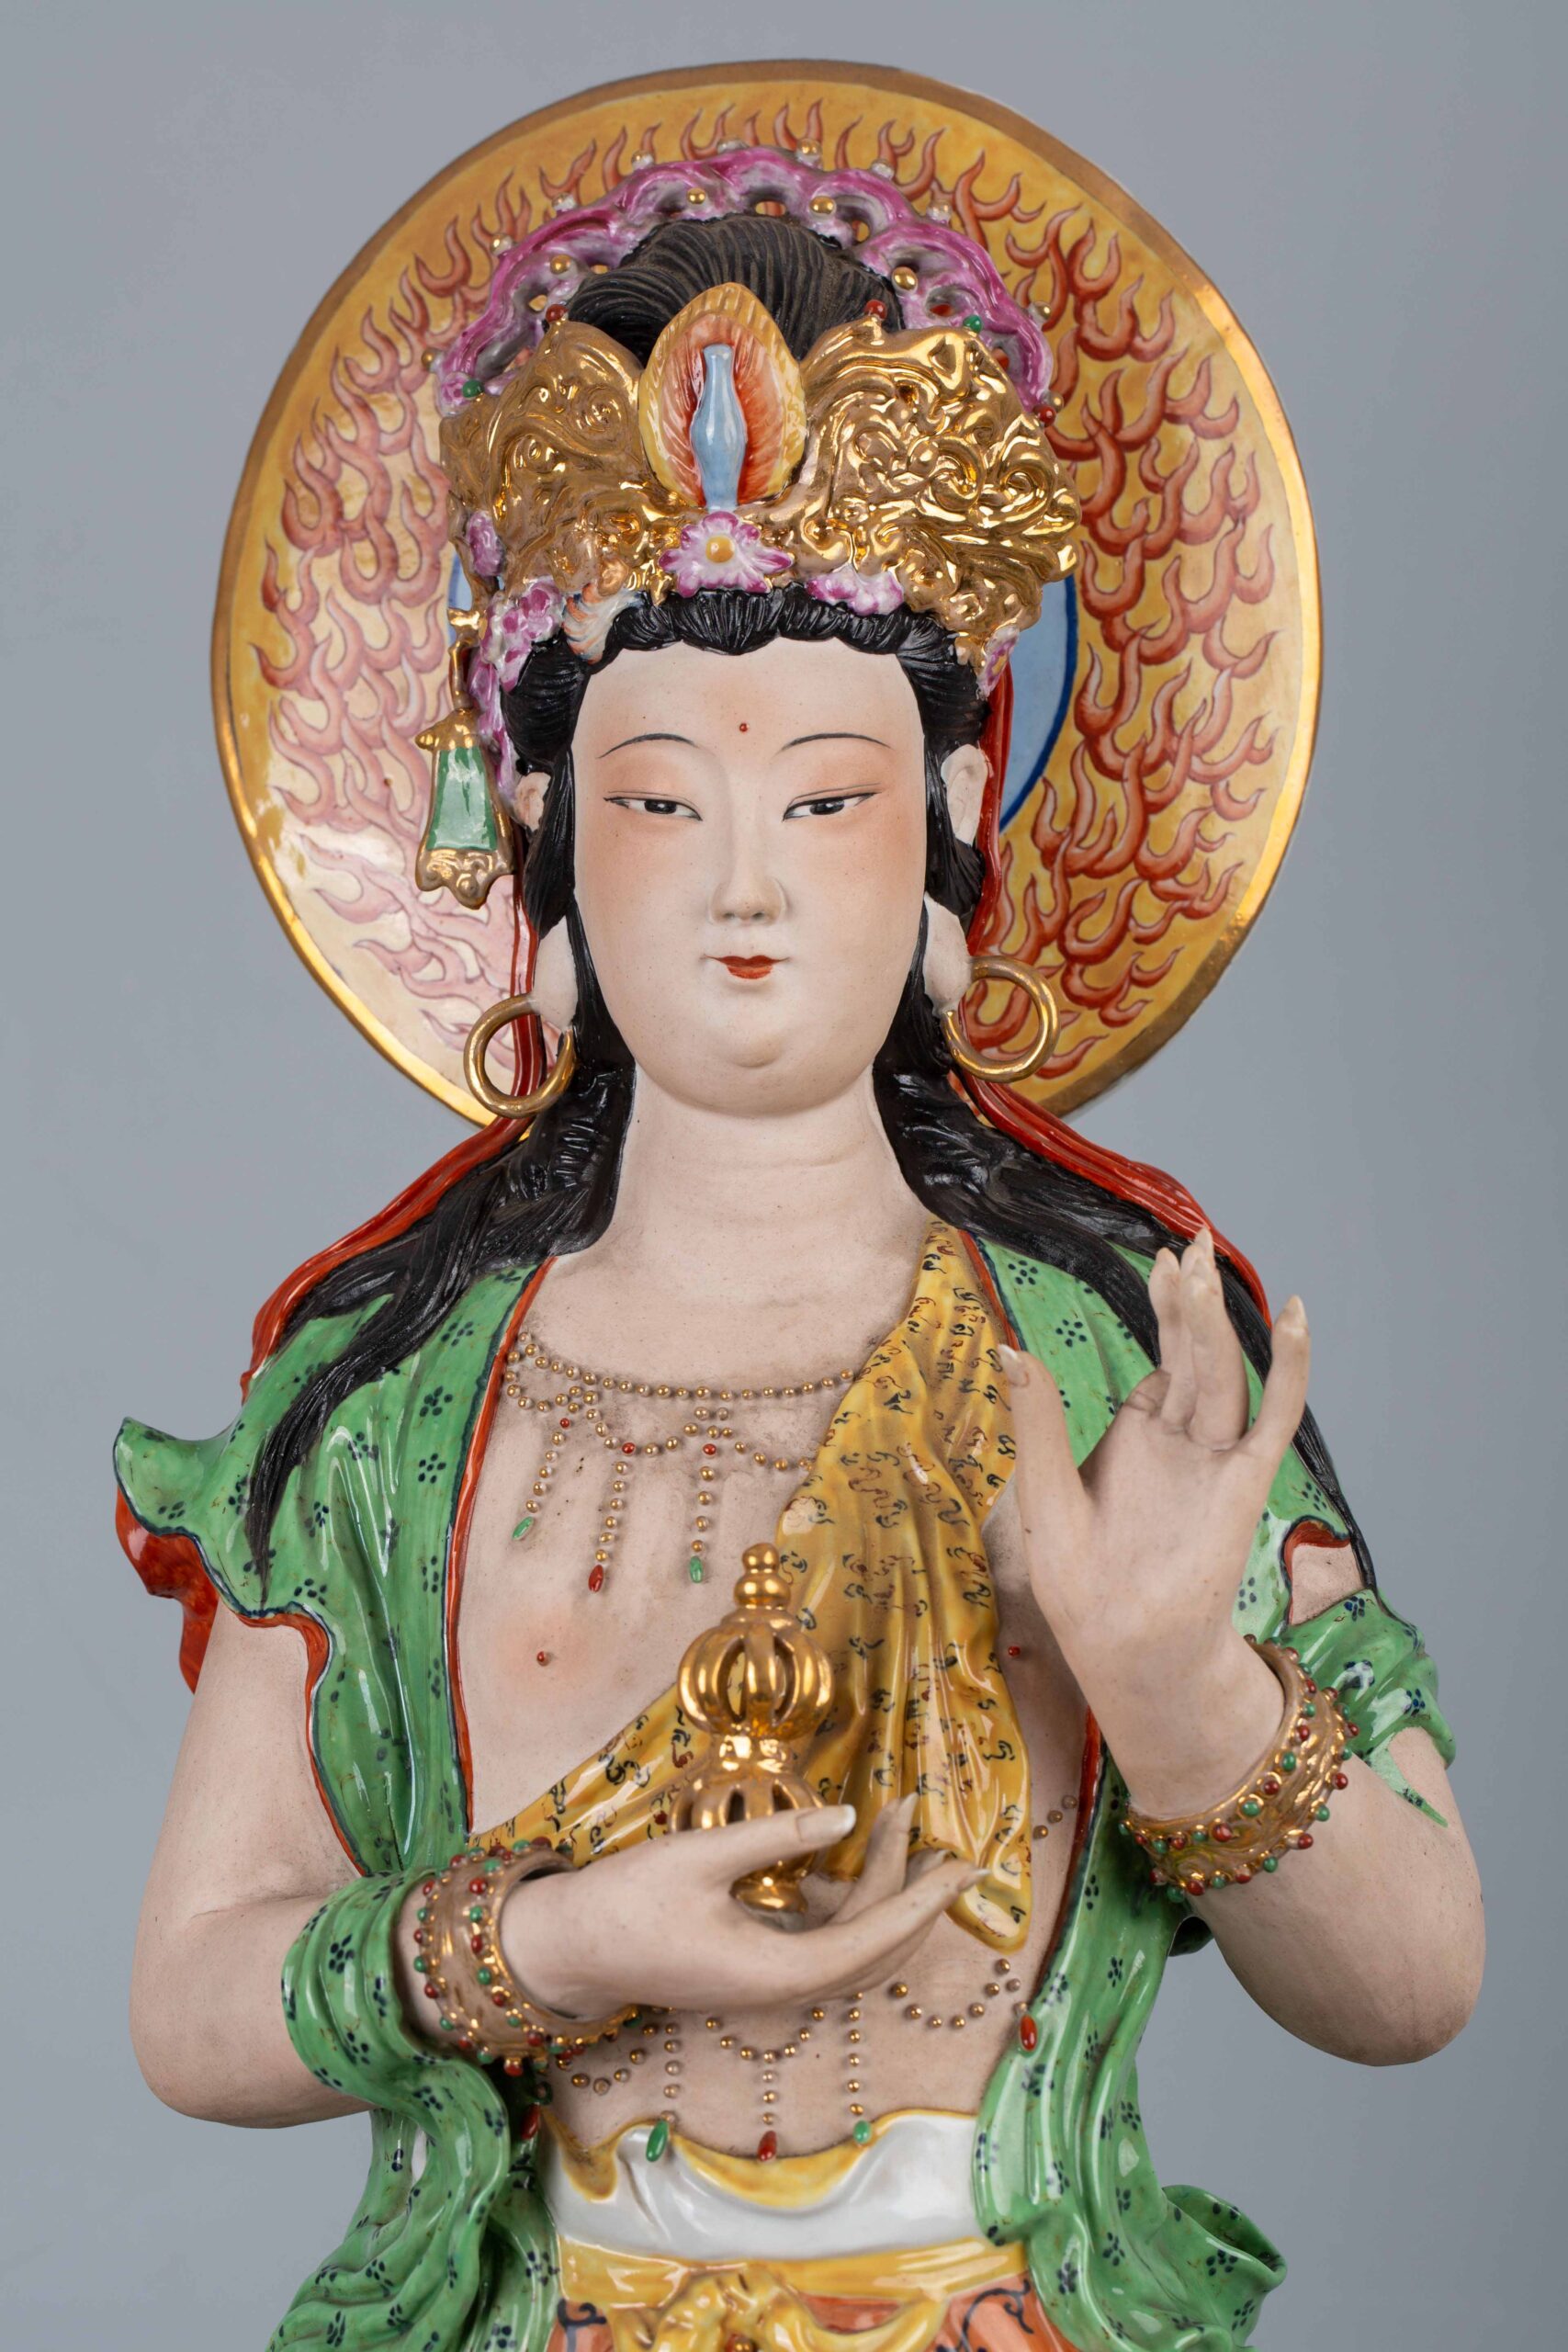 A set of three Buddhas西方三圣景德镇雕塑瓷厂作者曾山东装饰刘春根 